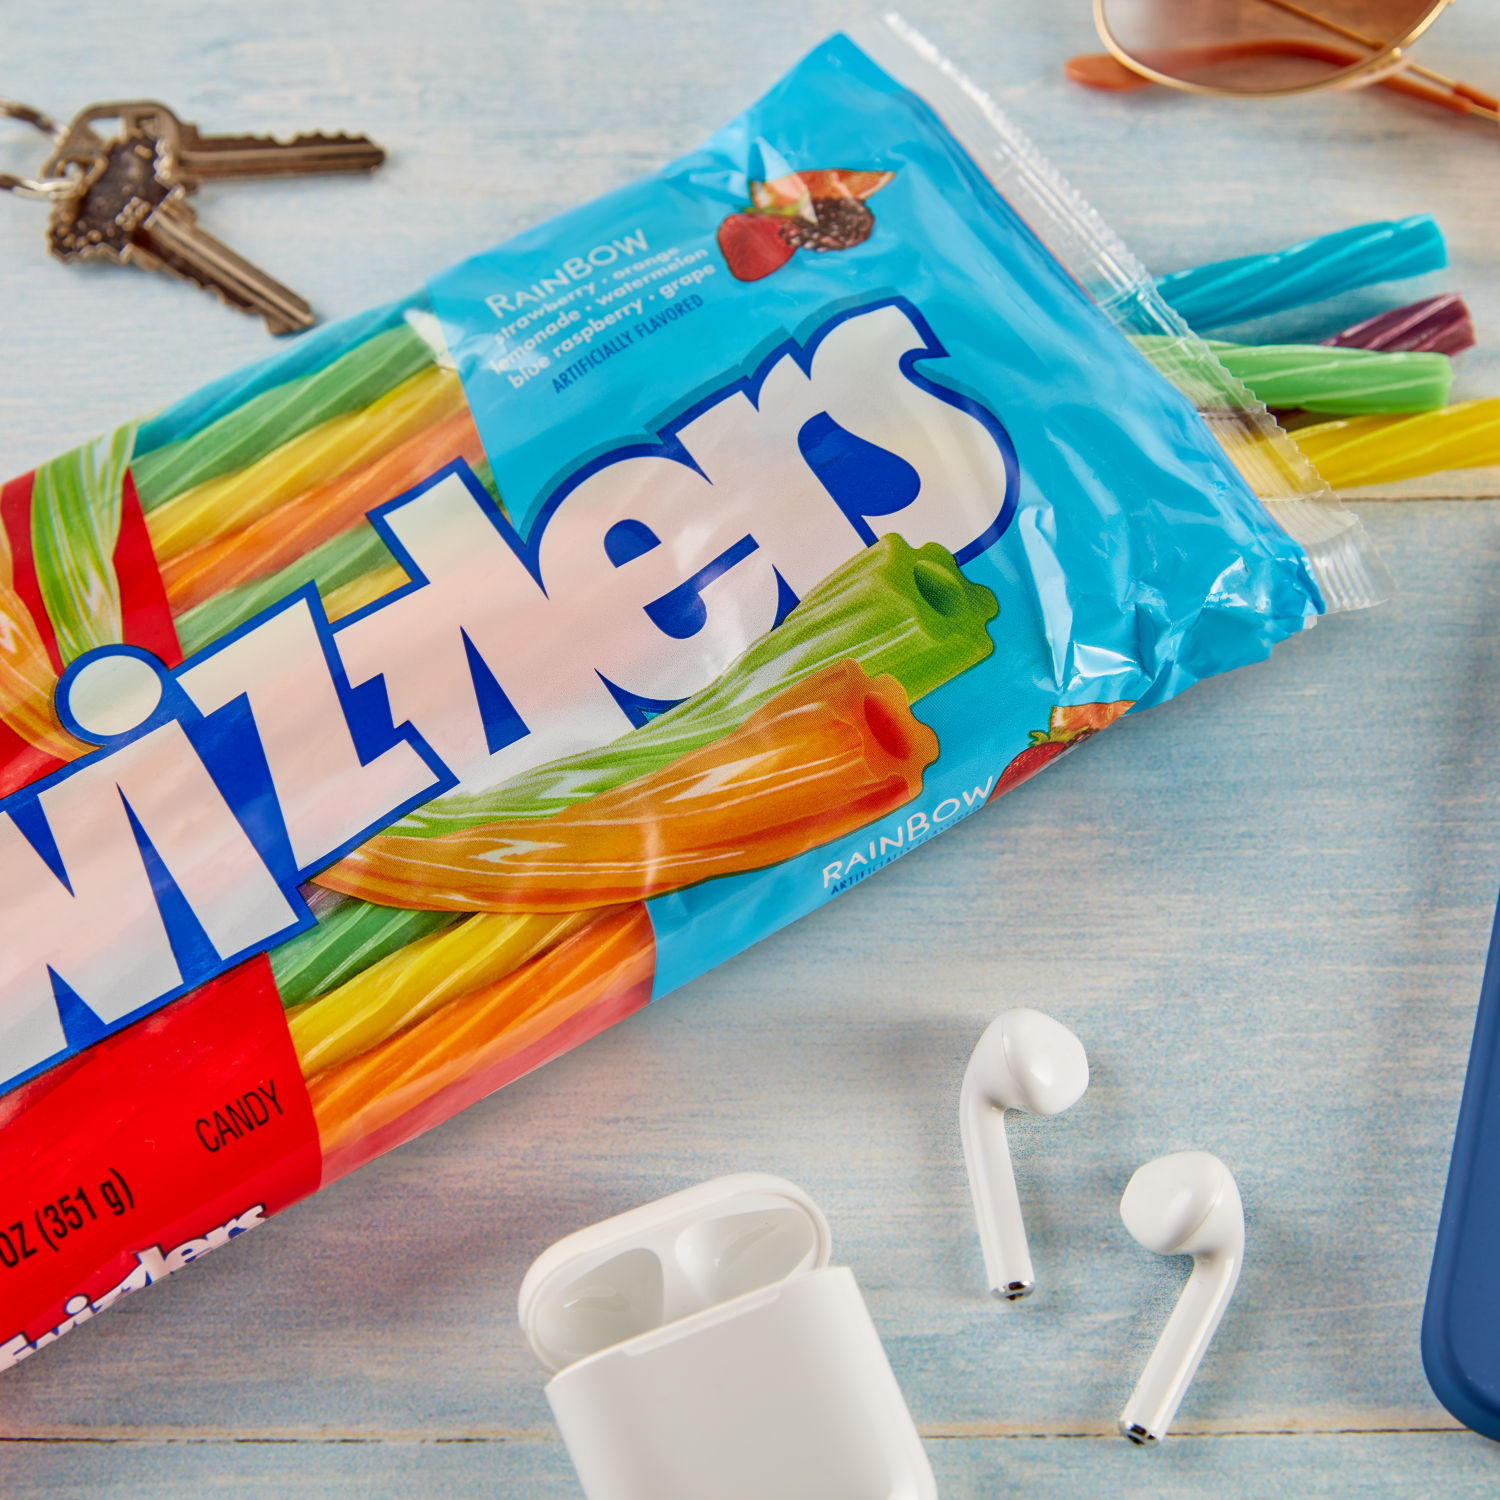 Twizzlers Rainbow Licorice Twists: 12-Ounce Bag